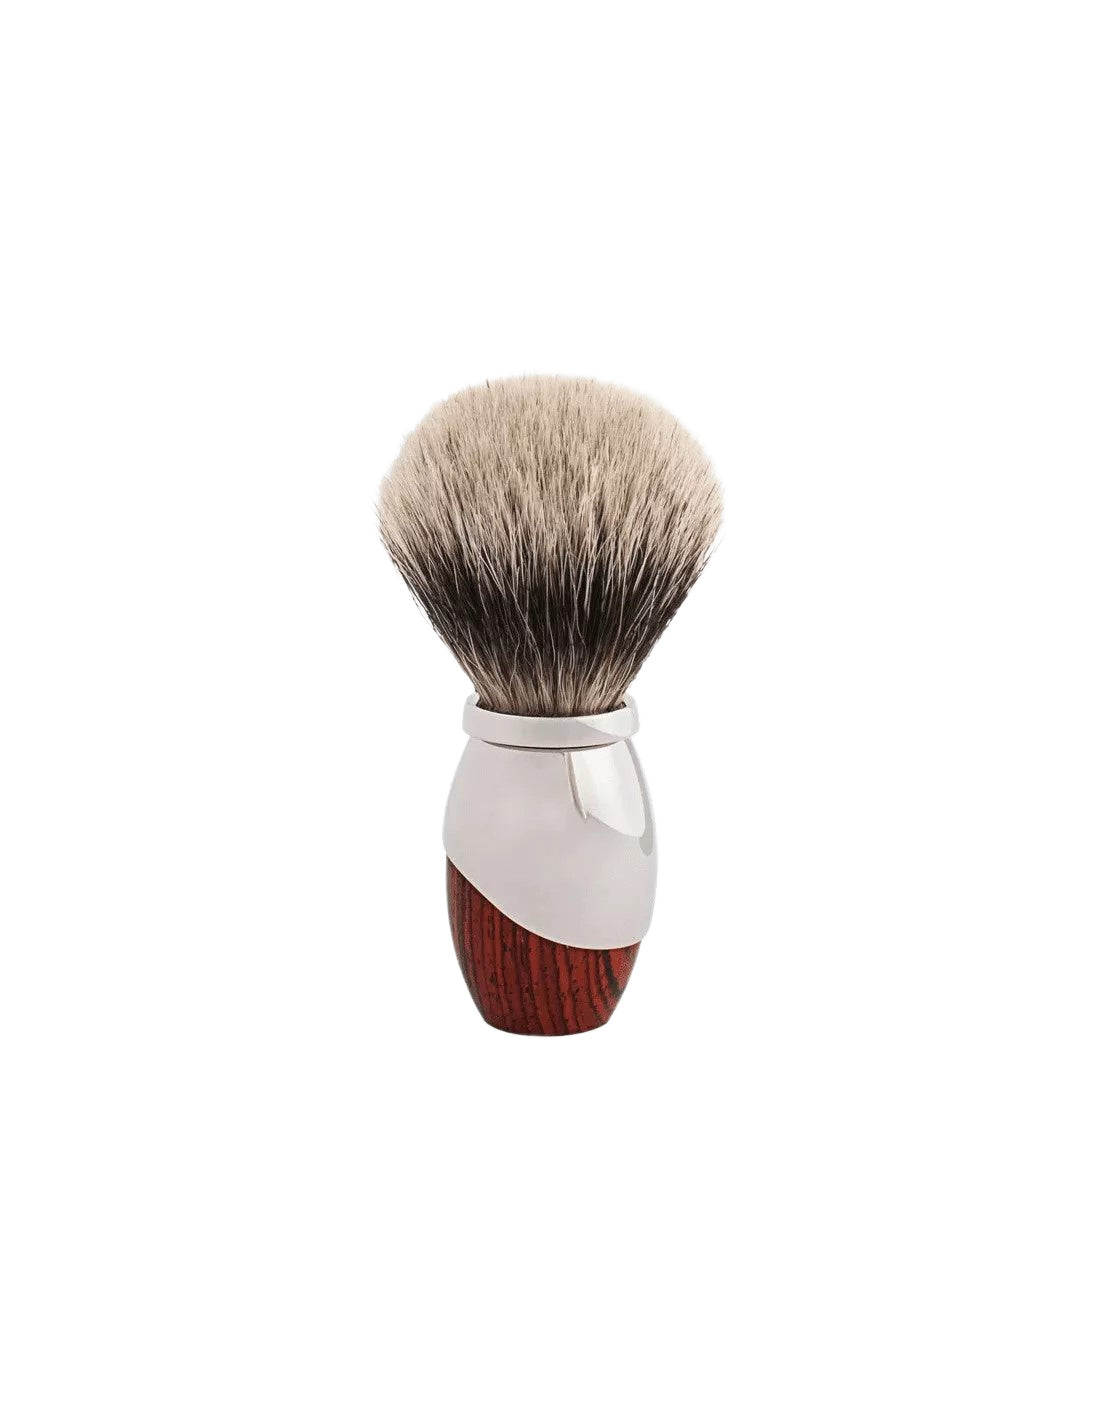 Plisson 1808 Odyssee Genuine Badger - Royal Palissander & Palladium Shaving Brush